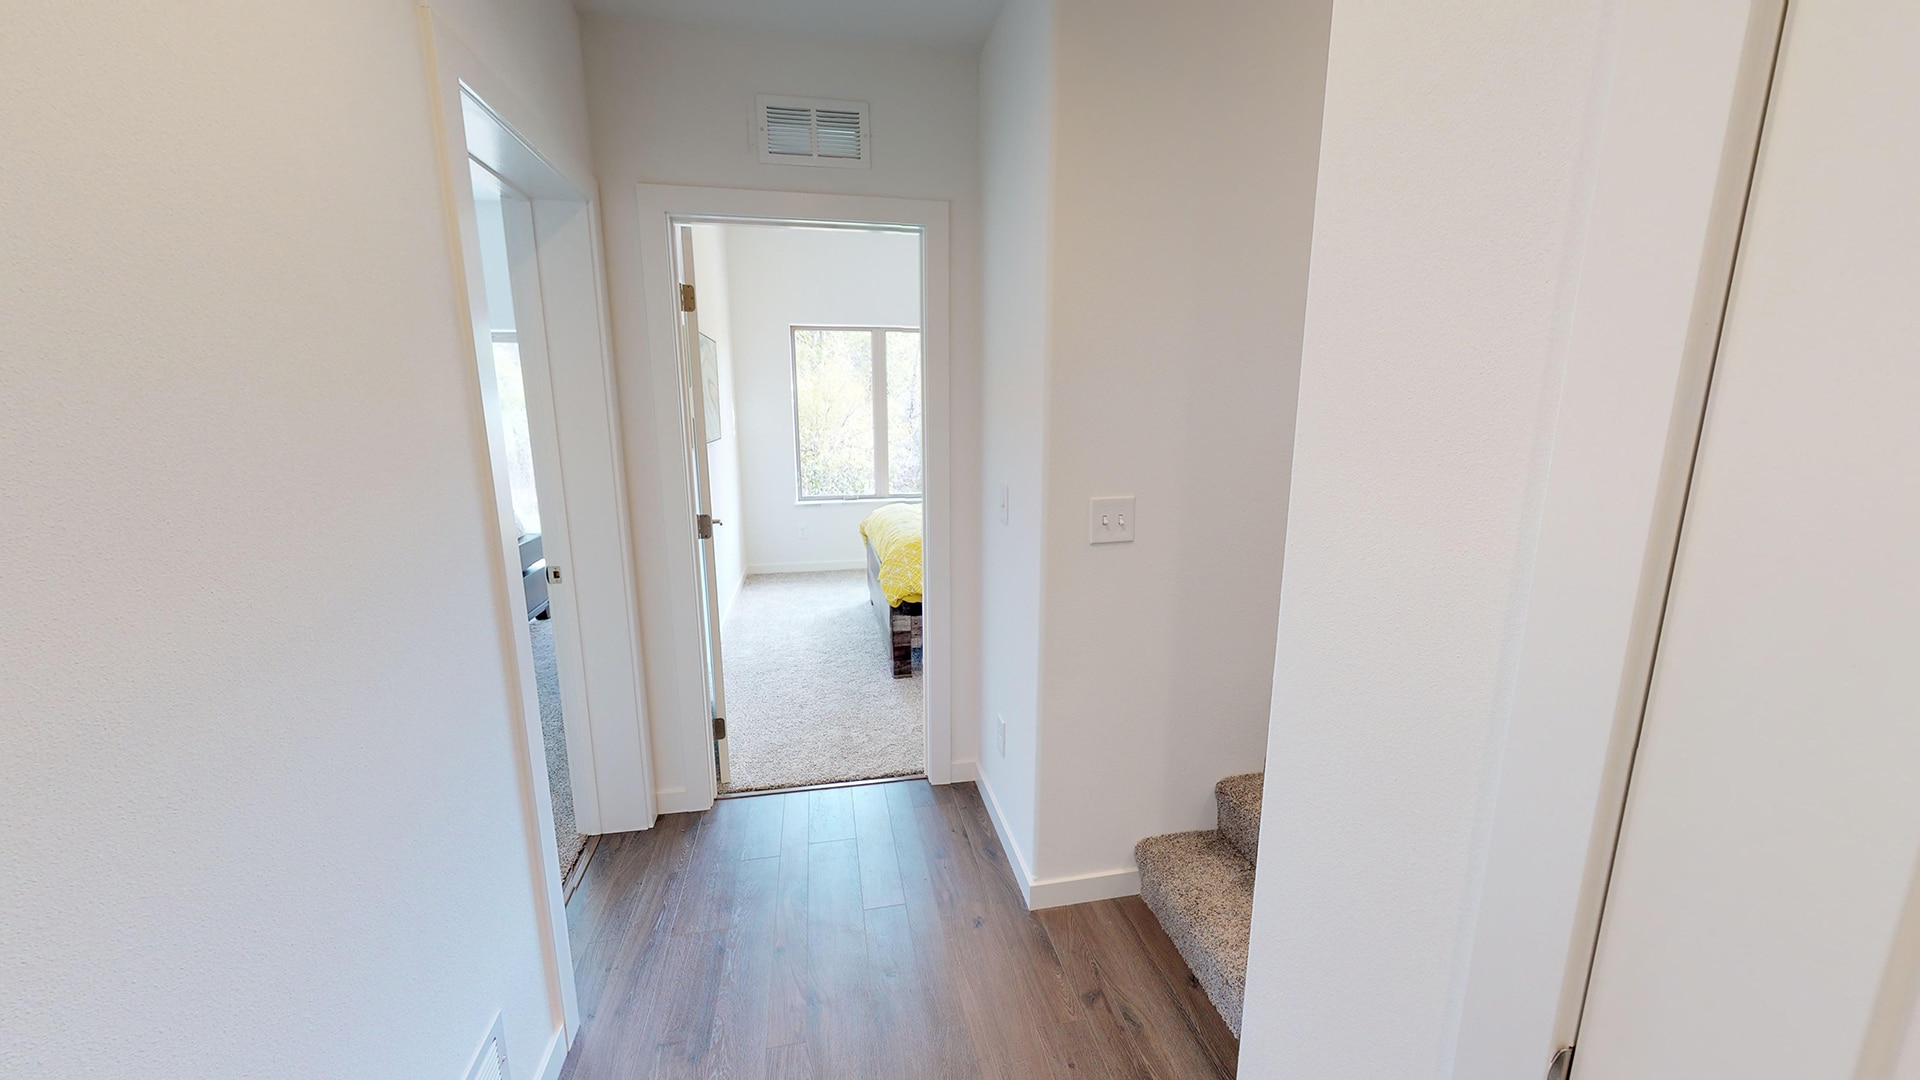 Hallway With Wood Flooring